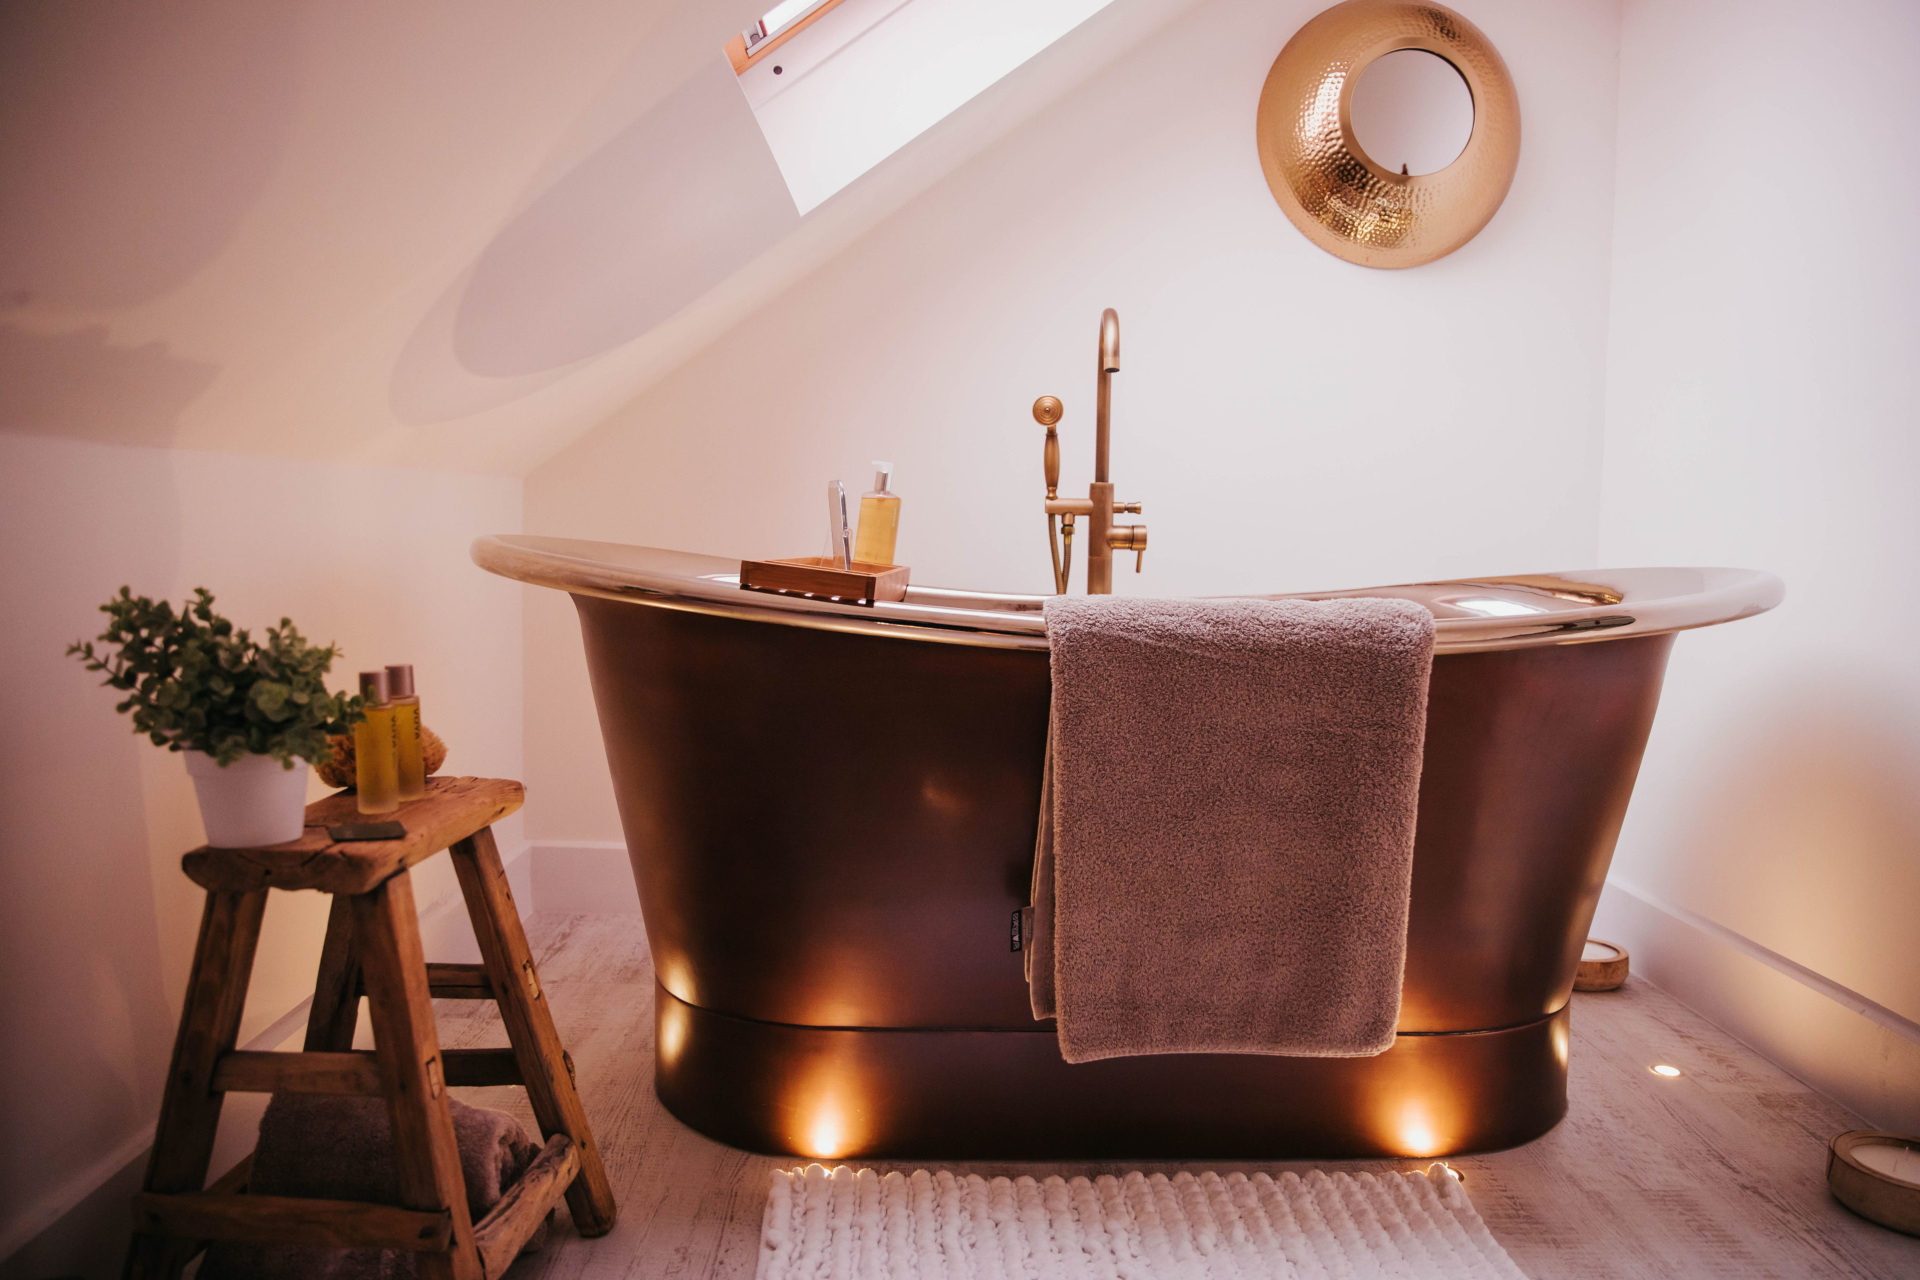 Copper bath in low lit room